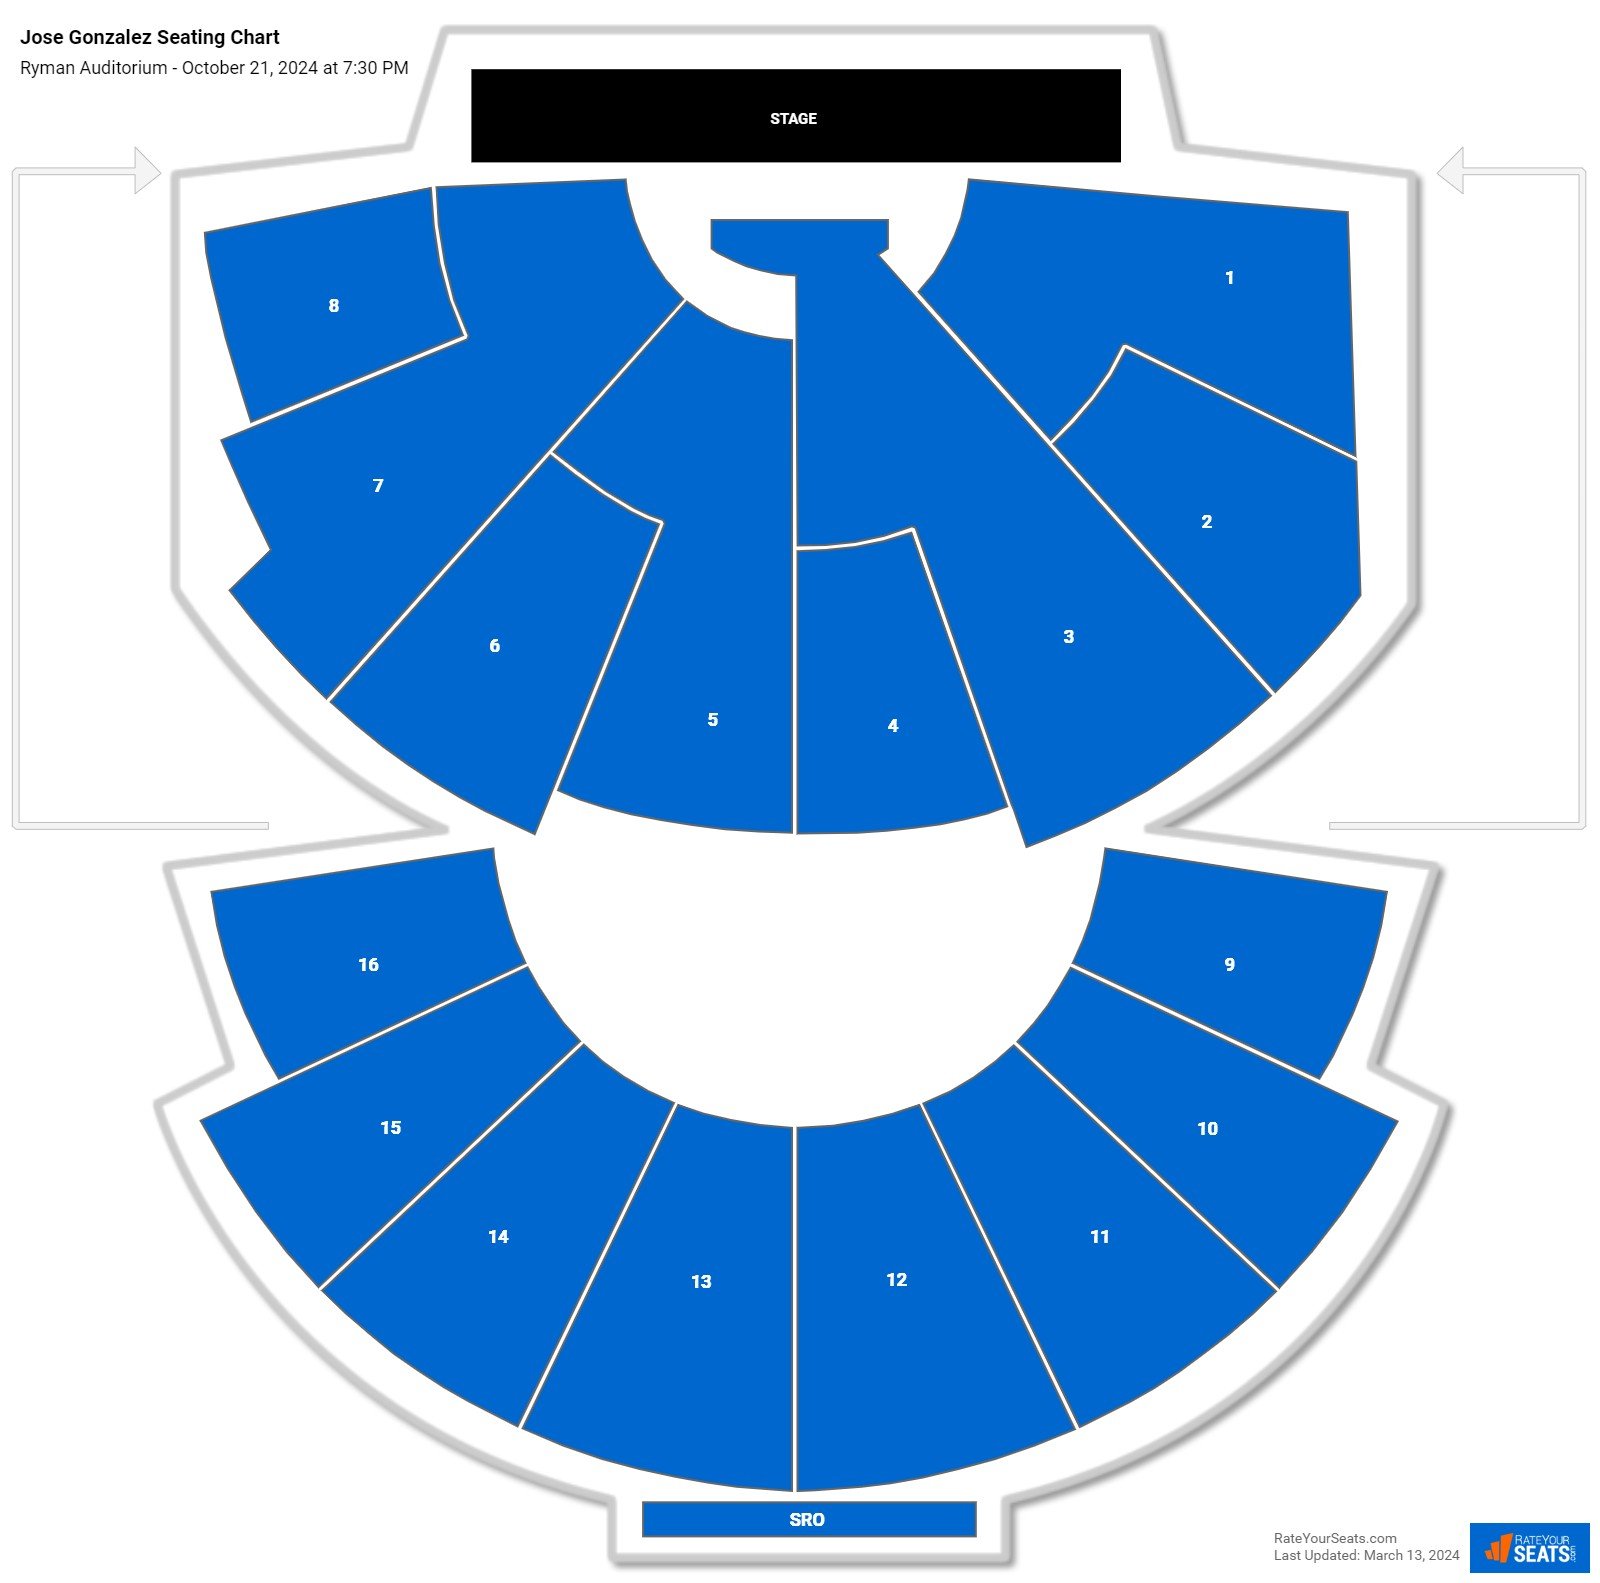 Jose Gonzalez seating chart Ryman Auditorium